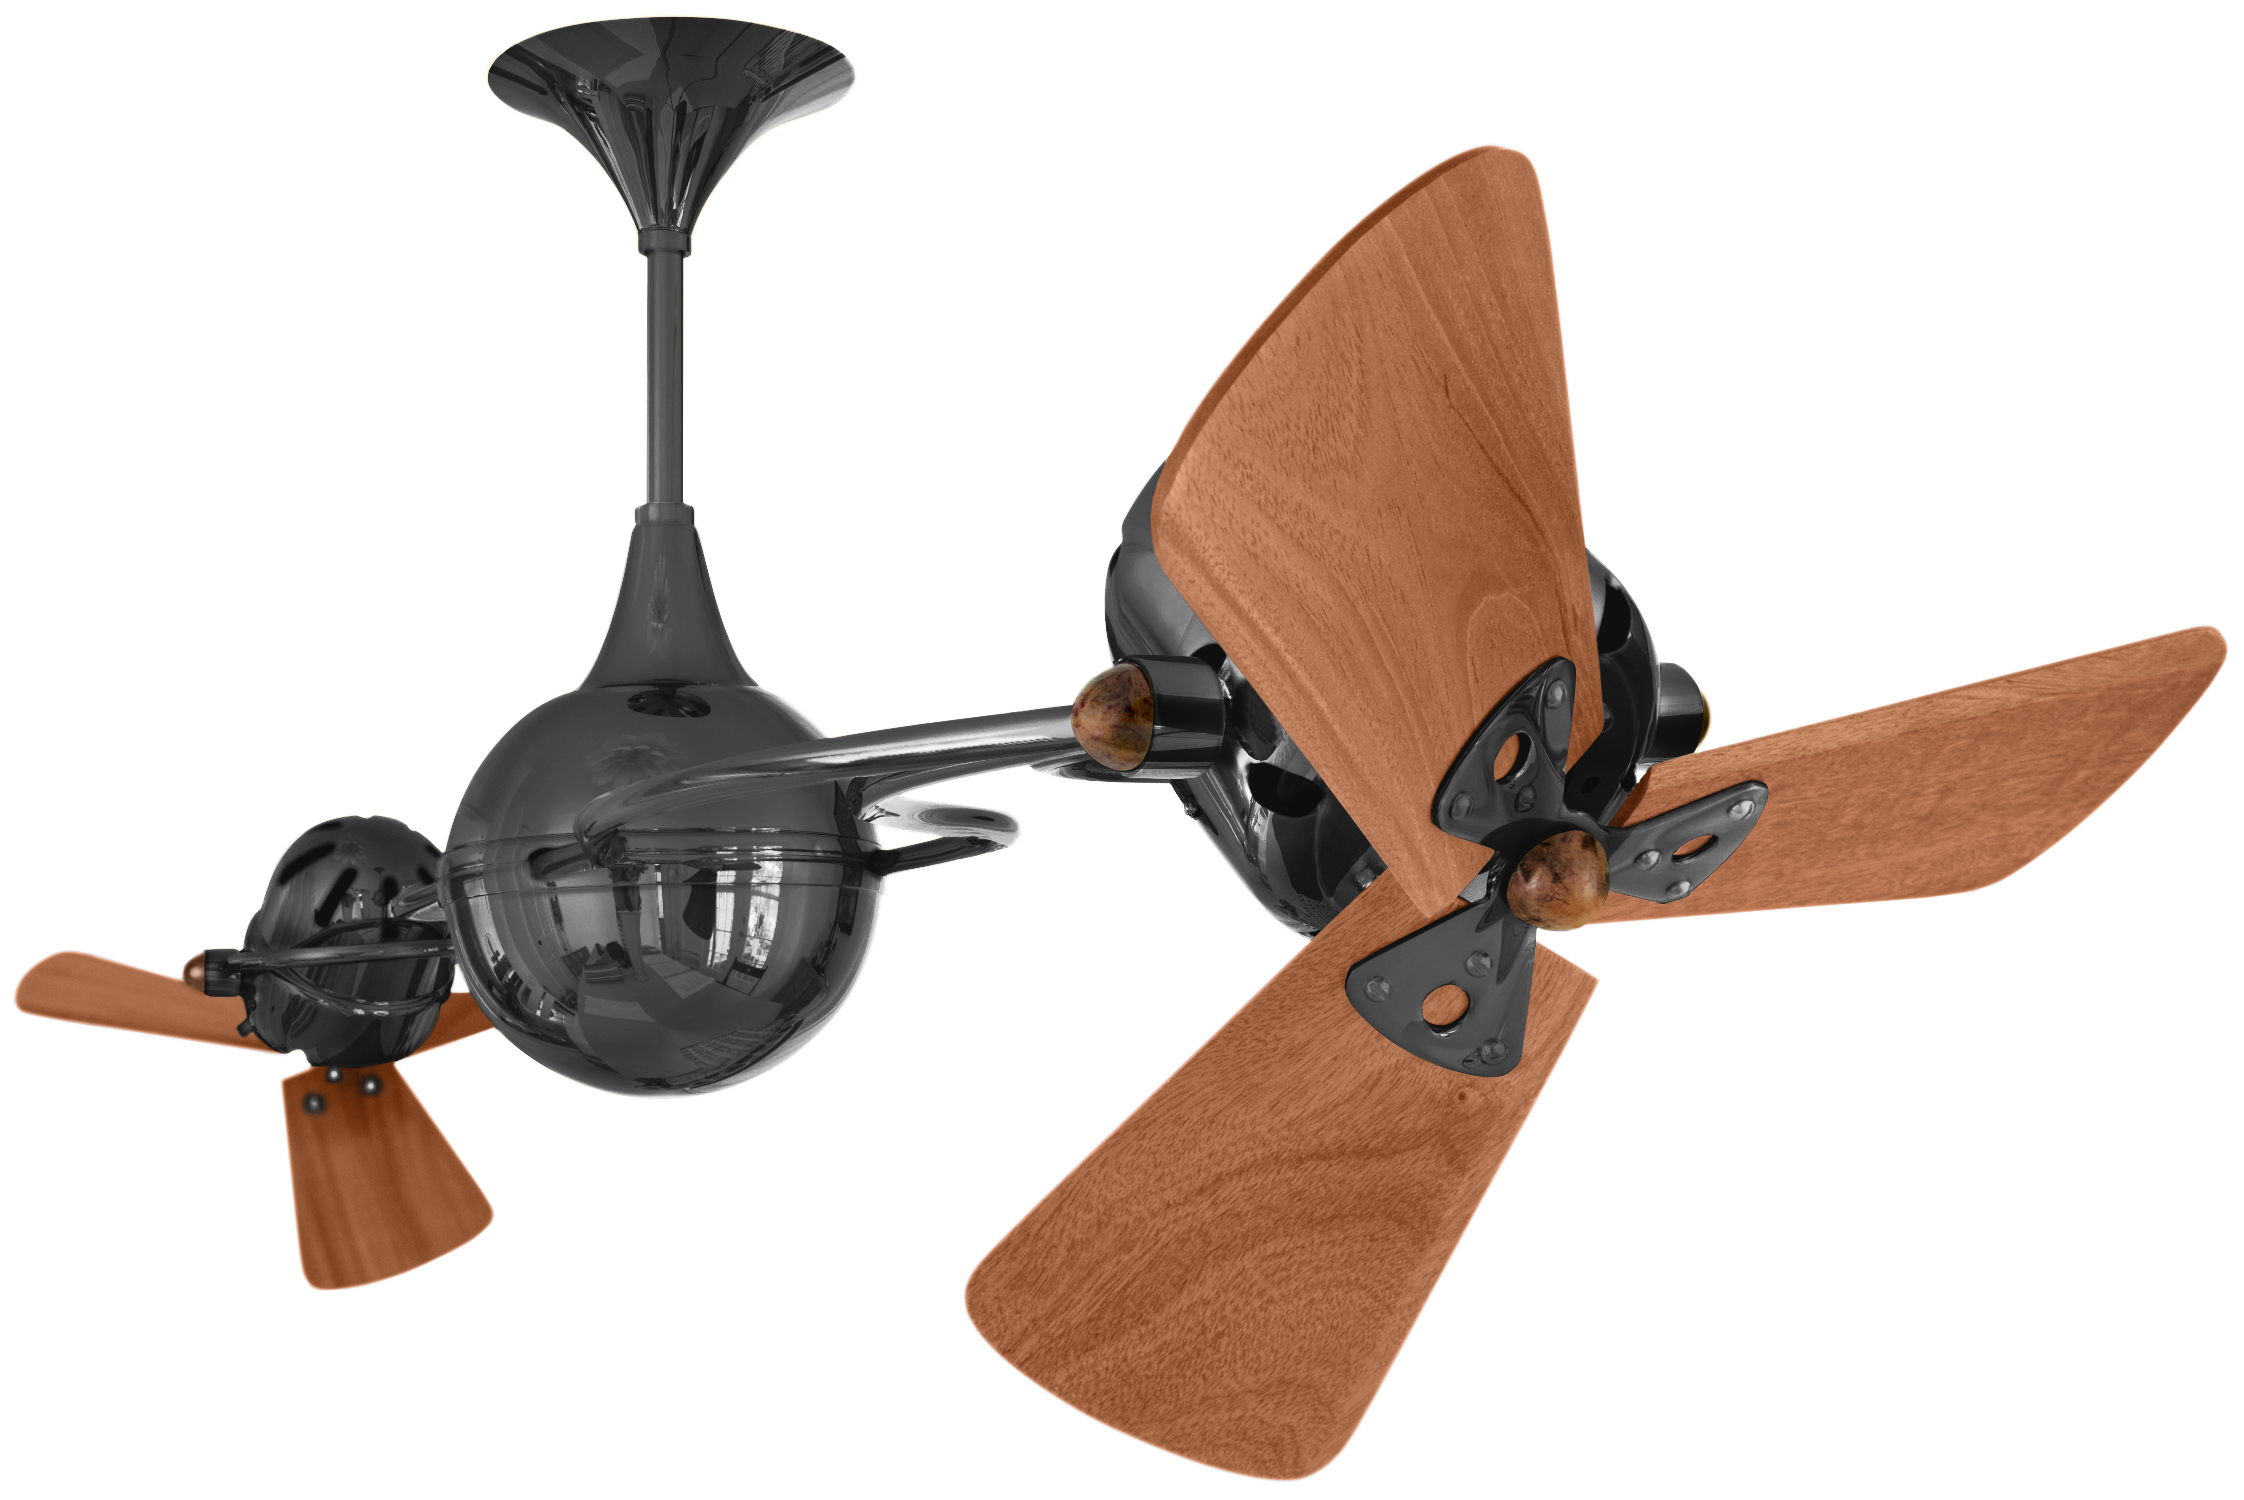 Italo Ventania rotational dual head ceiling fan in Black Nickel finish with solid mahogany wood blades made by Matthews Fan Company.